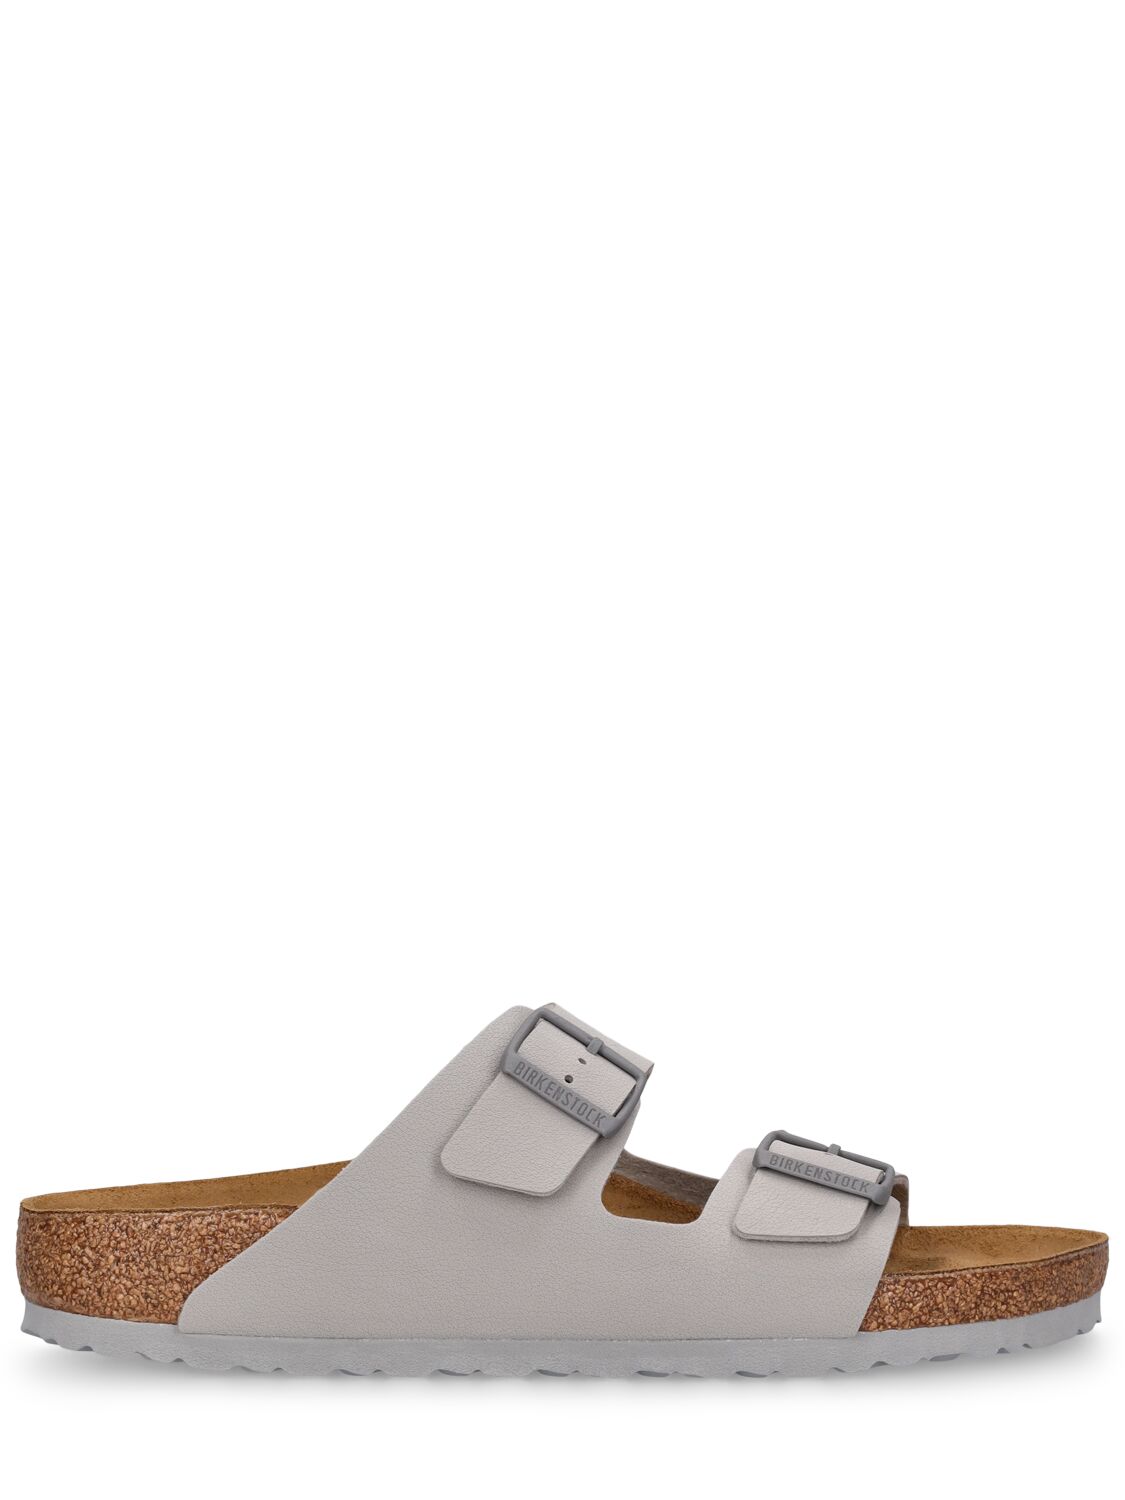 Birkenstock Arizona Faux Leather Sandals In Grey